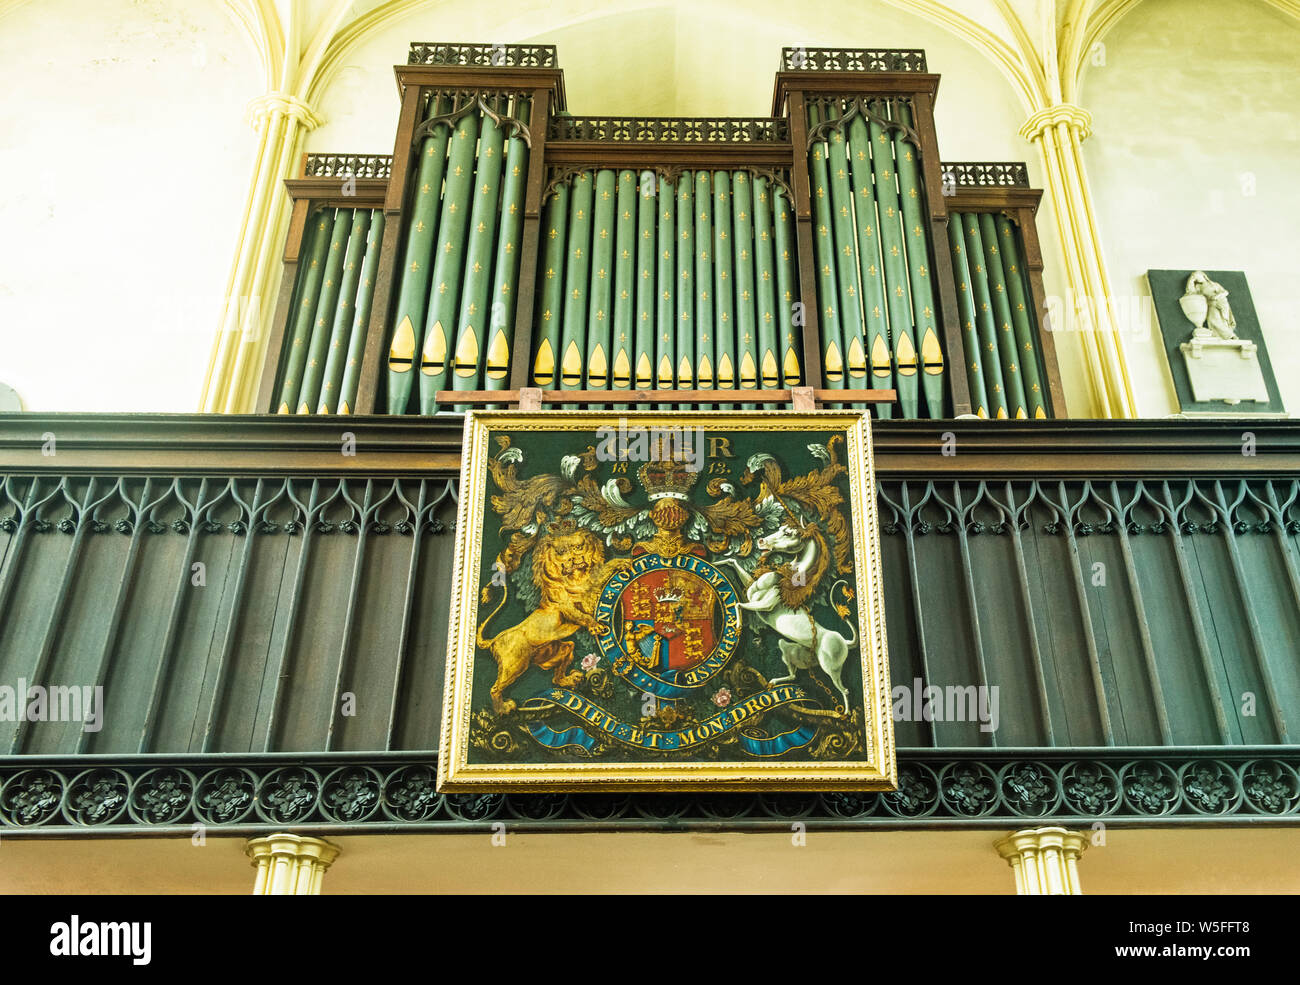 The organ loft in the Tetbury church of St Mary the Virgin Stock Photo